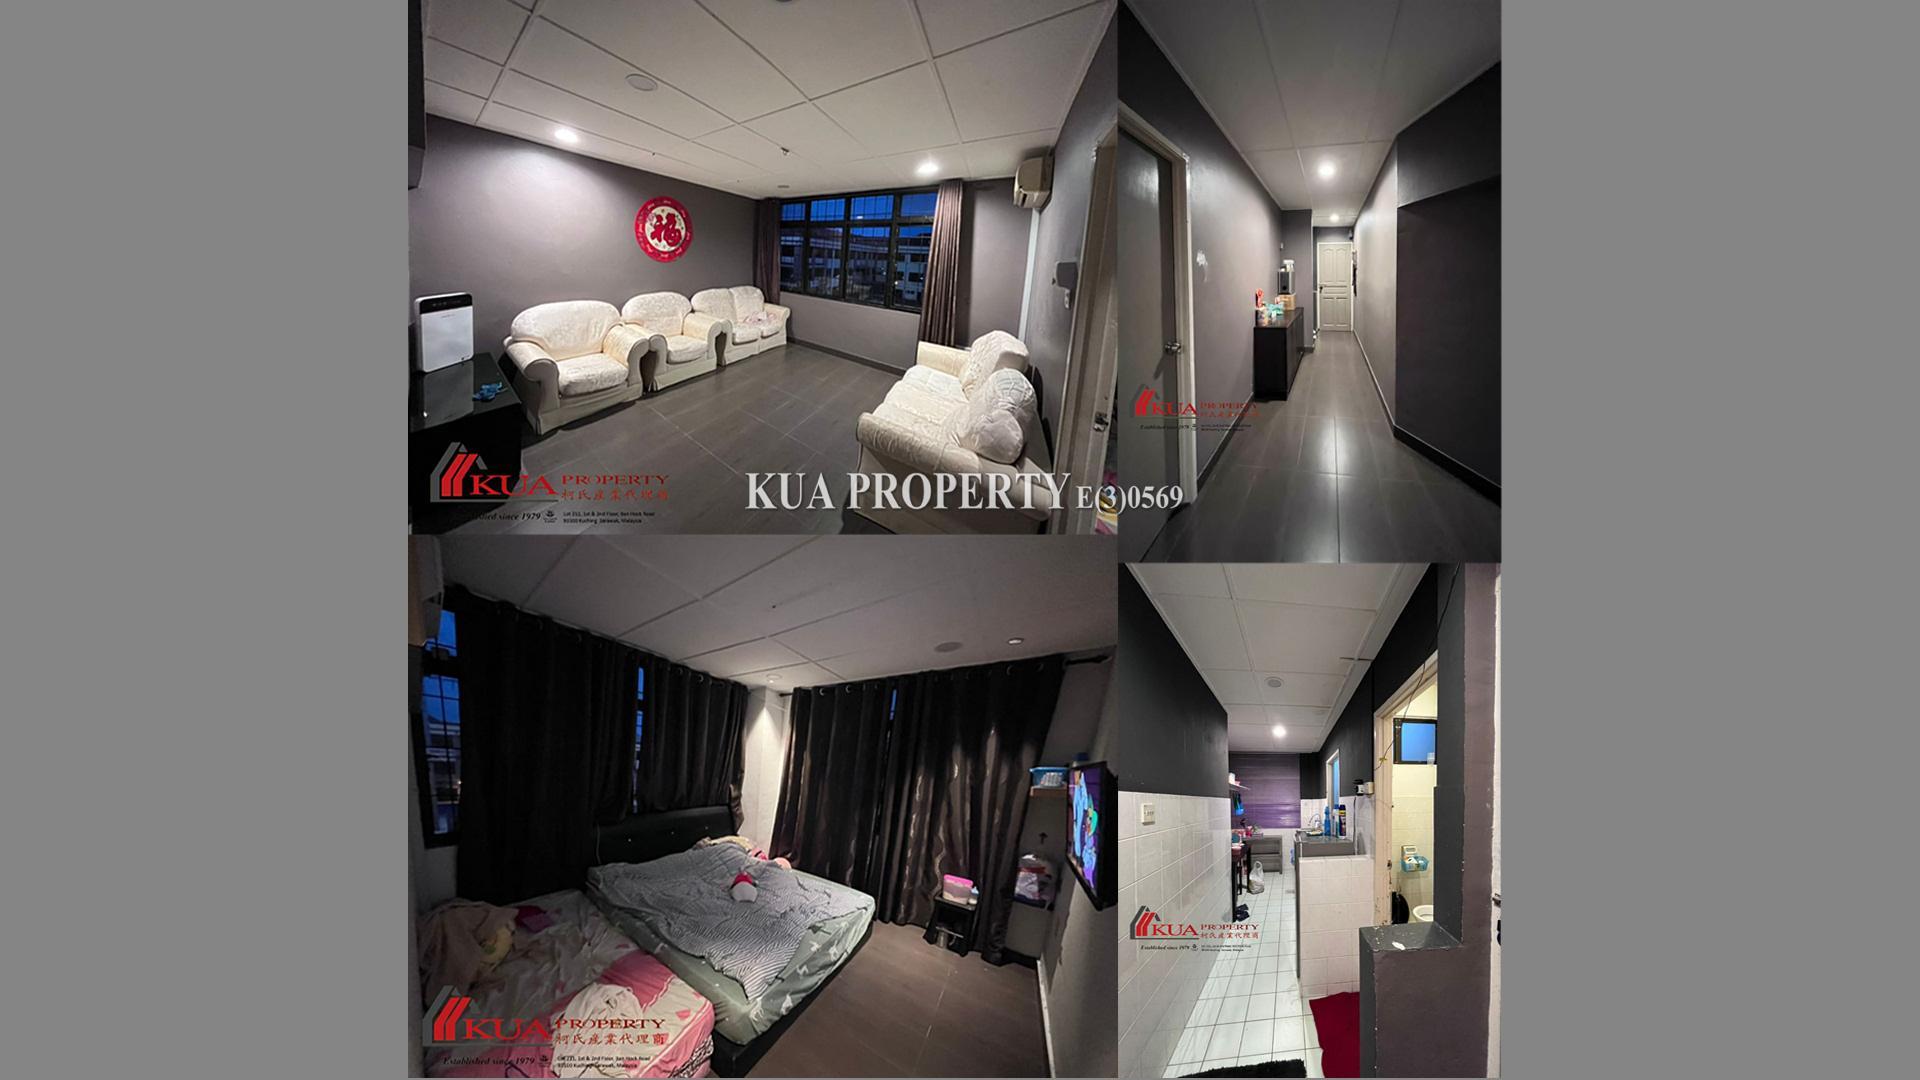 3rd Floor MJC Apartment For Sale! 📍Located at MJC, Batu Kawa